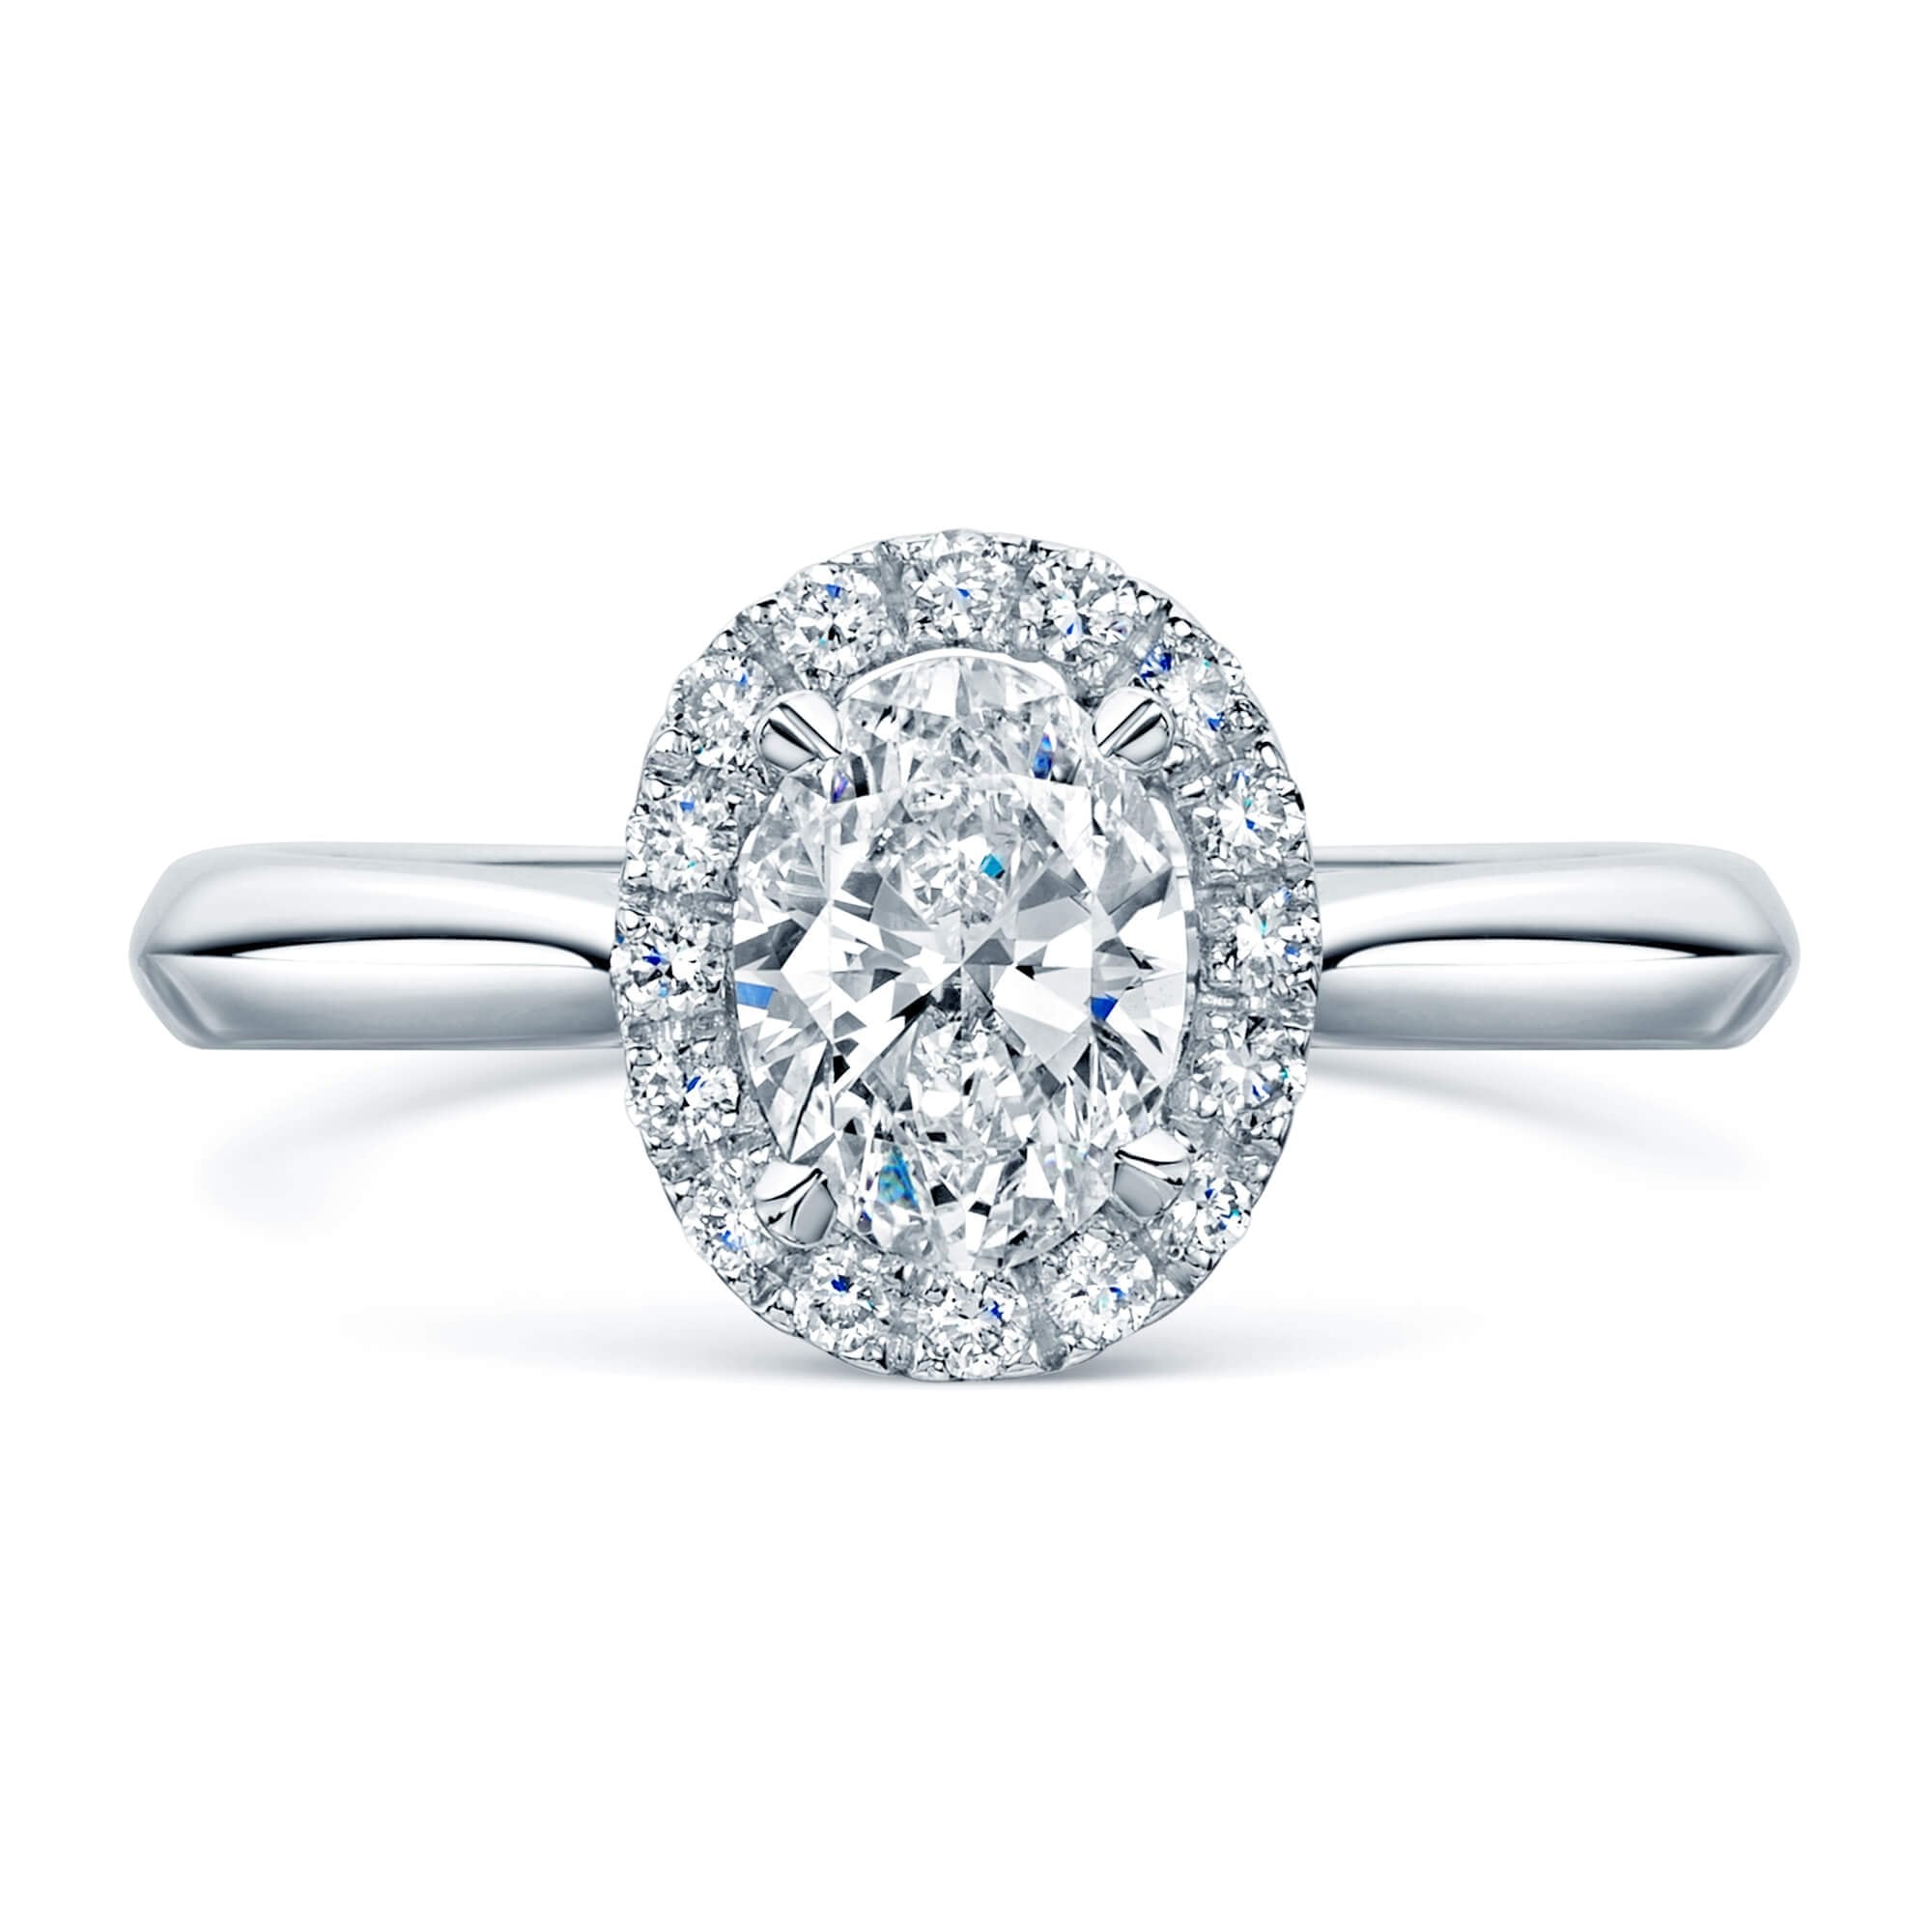 Platinum GIA Certificated Oval Diamond Ring With A Diamond Halo Surround